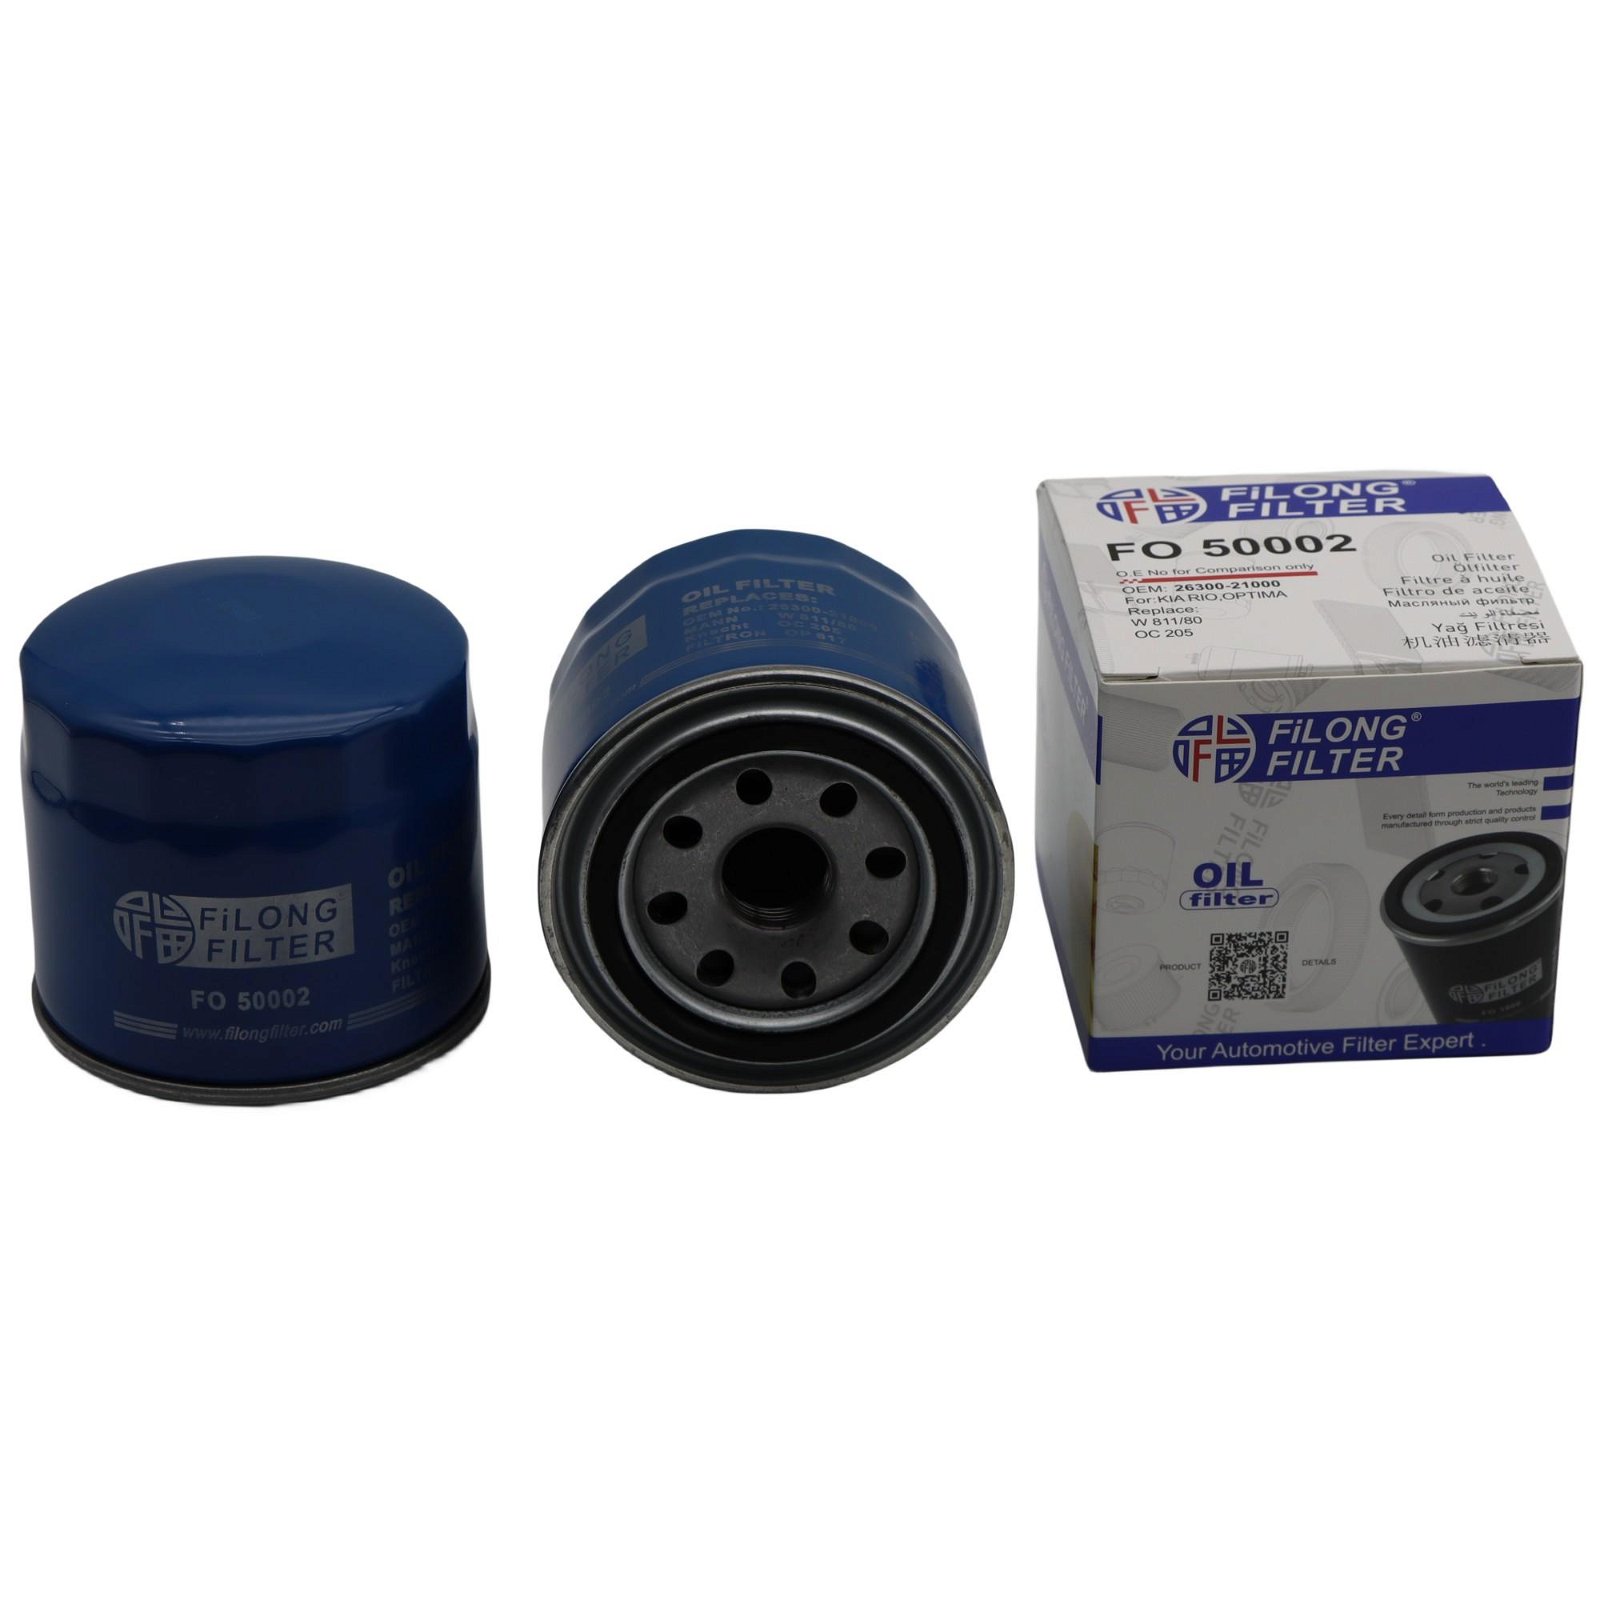 USE for KIA Cerato Sportage CARS oil filter 26300-21000 For Korean cars W811/80 